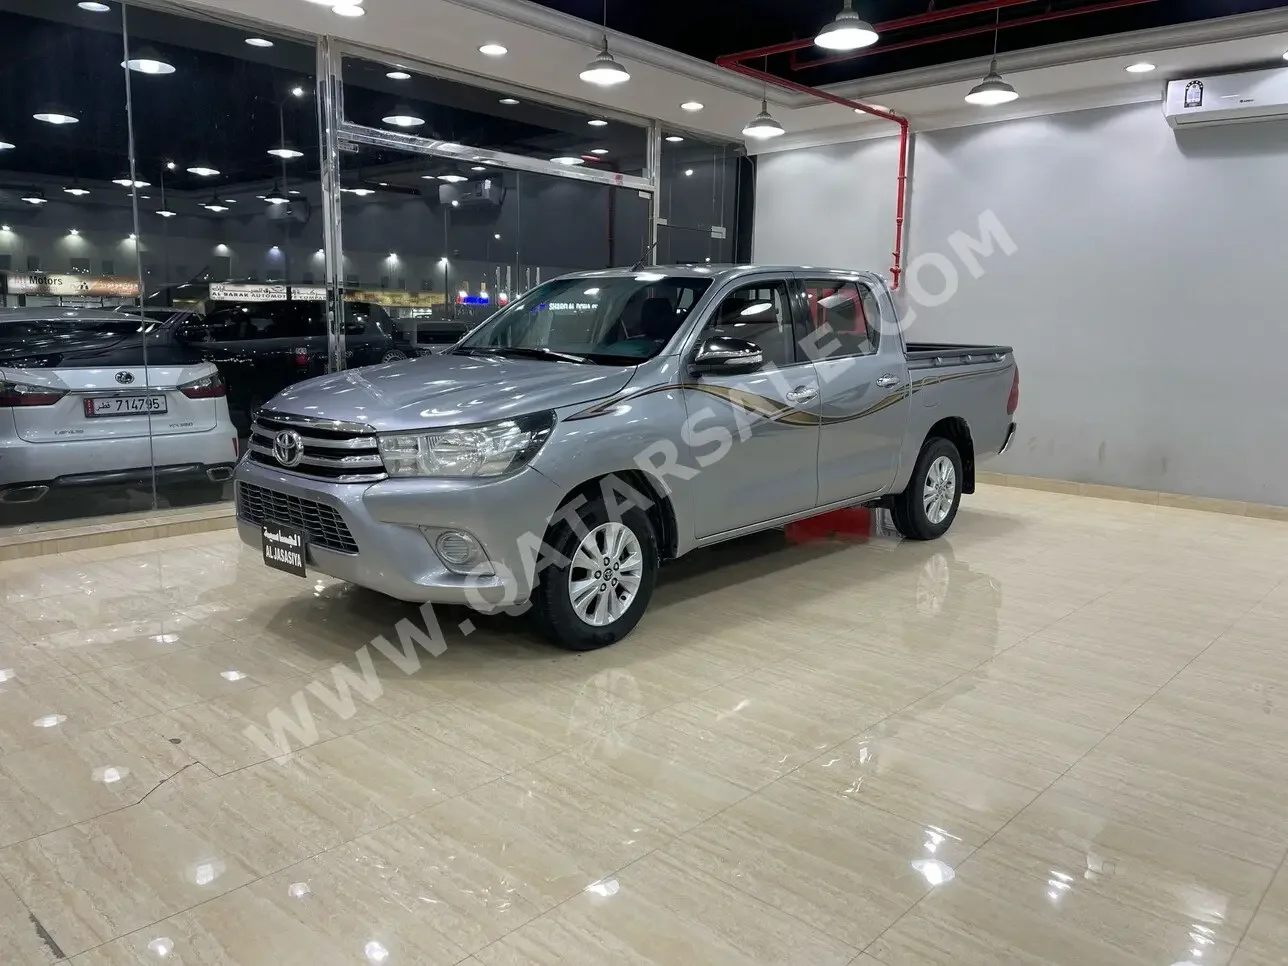 Toyota  Hilux  SR5  2017  Automatic  231,000 Km  4 Cylinder  Rear Wheel Drive (RWD)  Pick Up  Silver